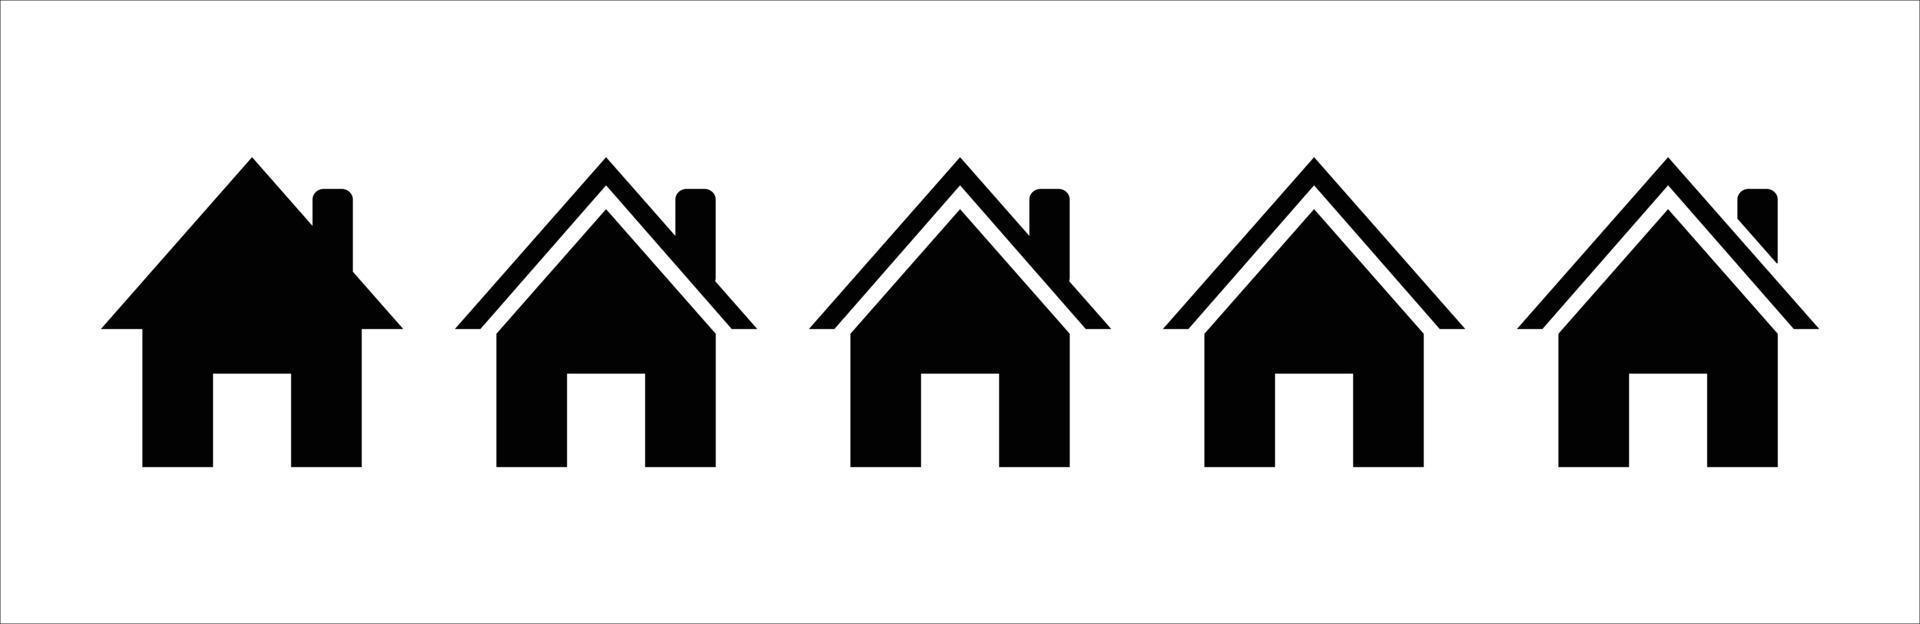 huis pictogram huis vector huis logo huis logo